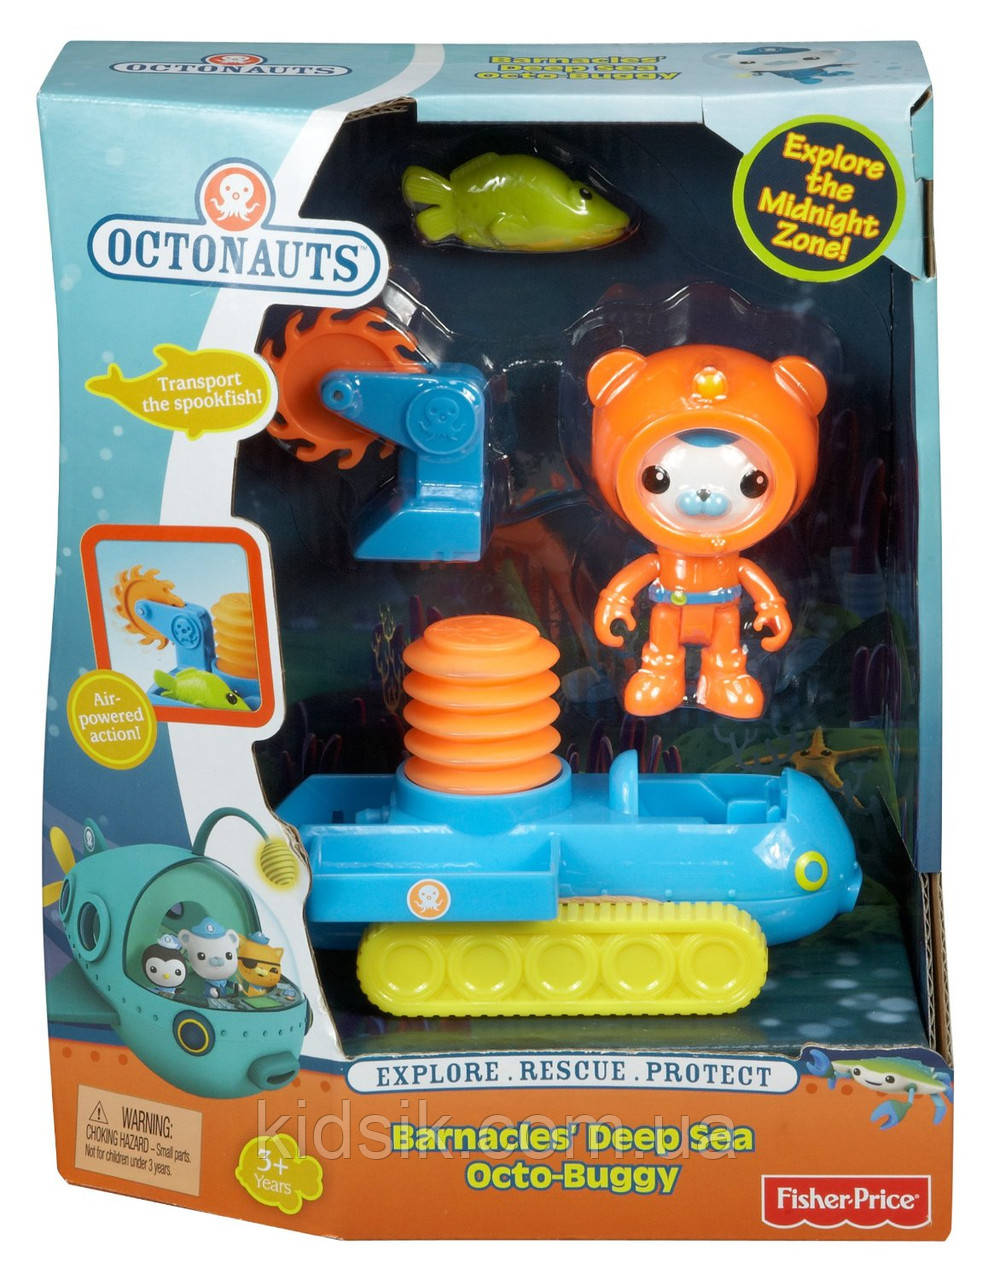 Іграшки "Октонавты" Fisher-Price Octonauts Barnacles' Deep Sea Single-Buggy Play Set